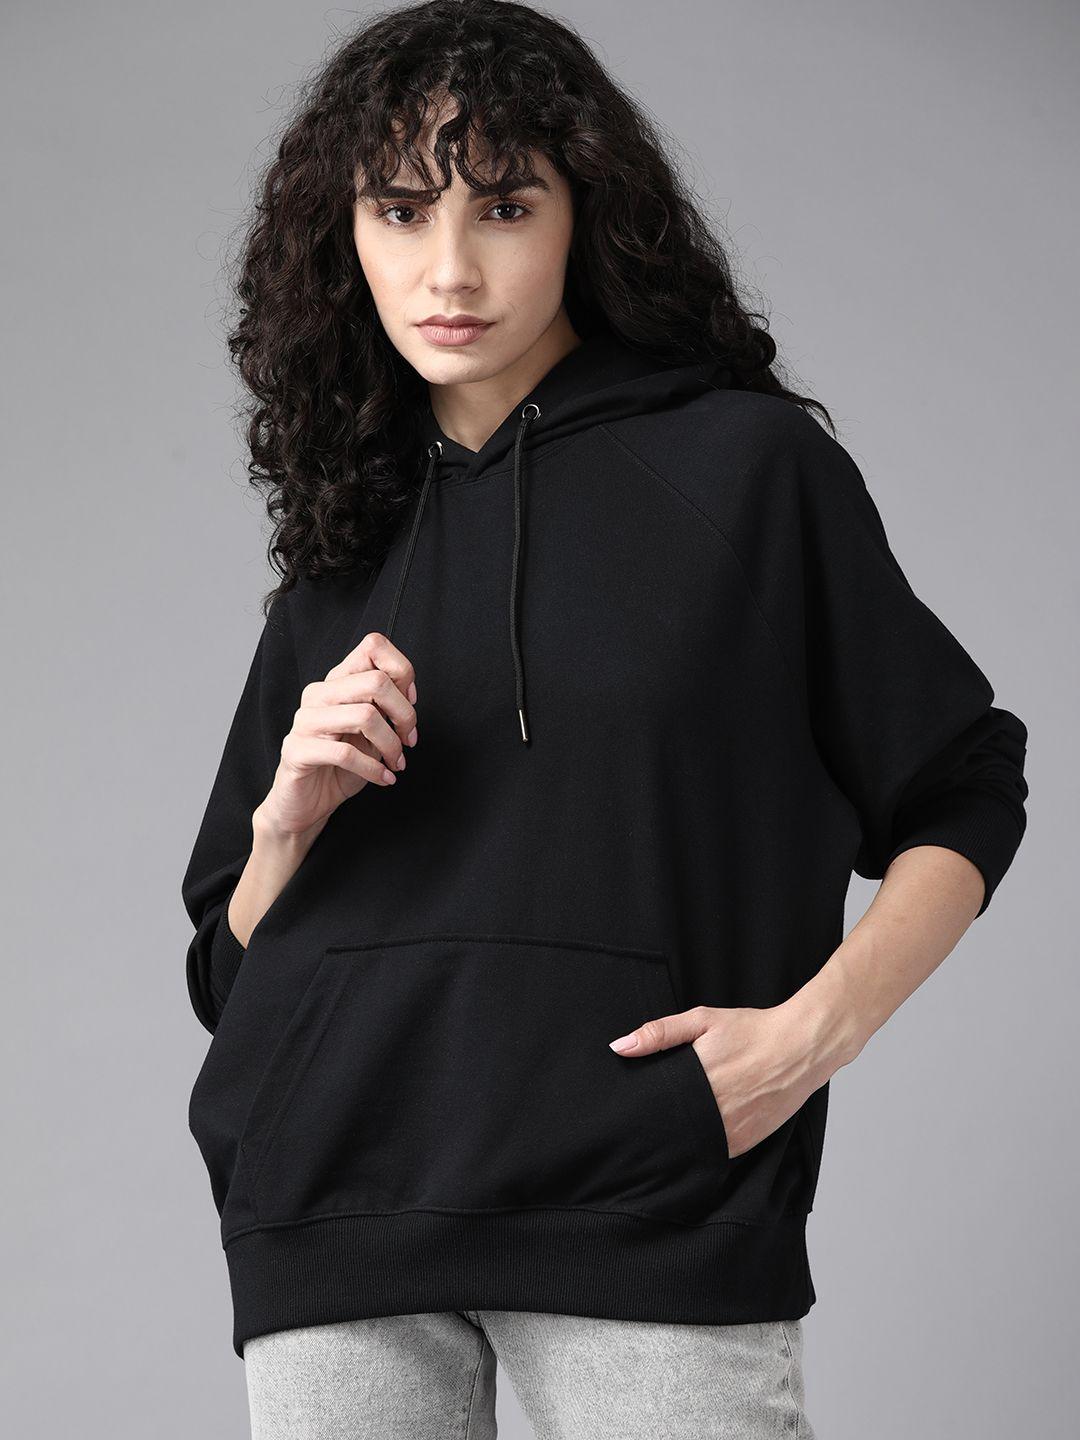 the roadster lifestyle co. women black raglan sleeves hooded oversized sweatshirt